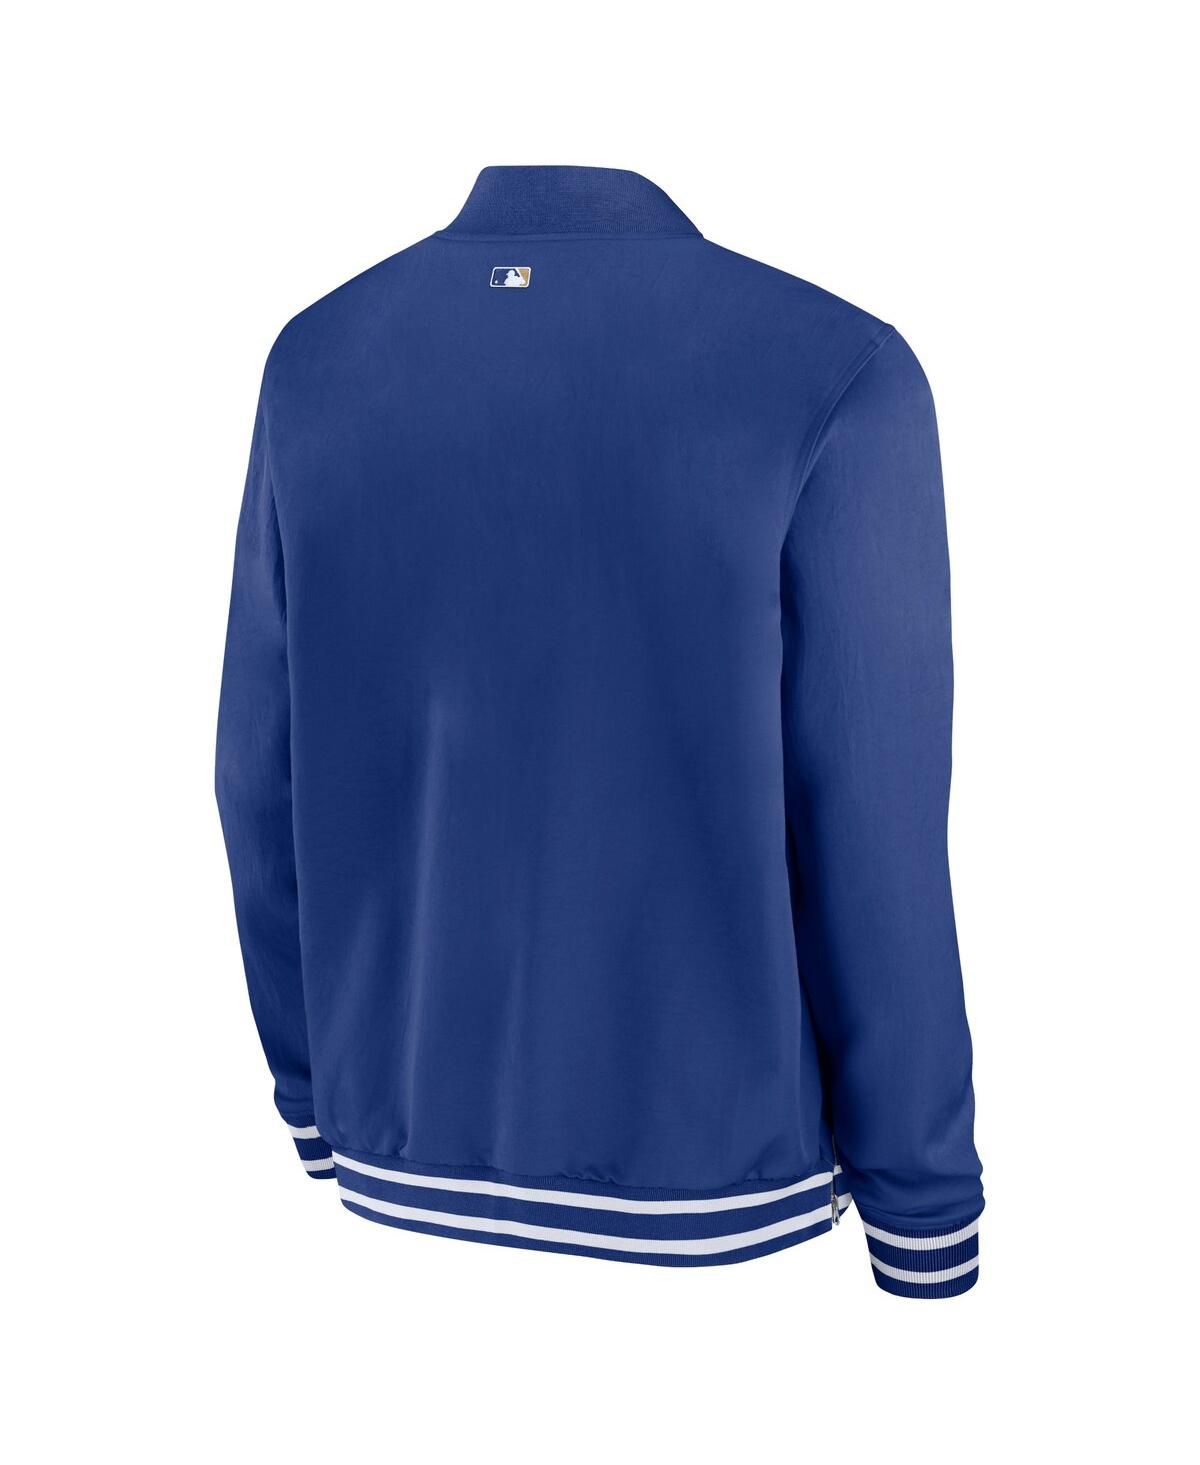 Shop Nike Men's  Royal Kansas City Royals Authentic Collection Full-zip Bomber Jacket